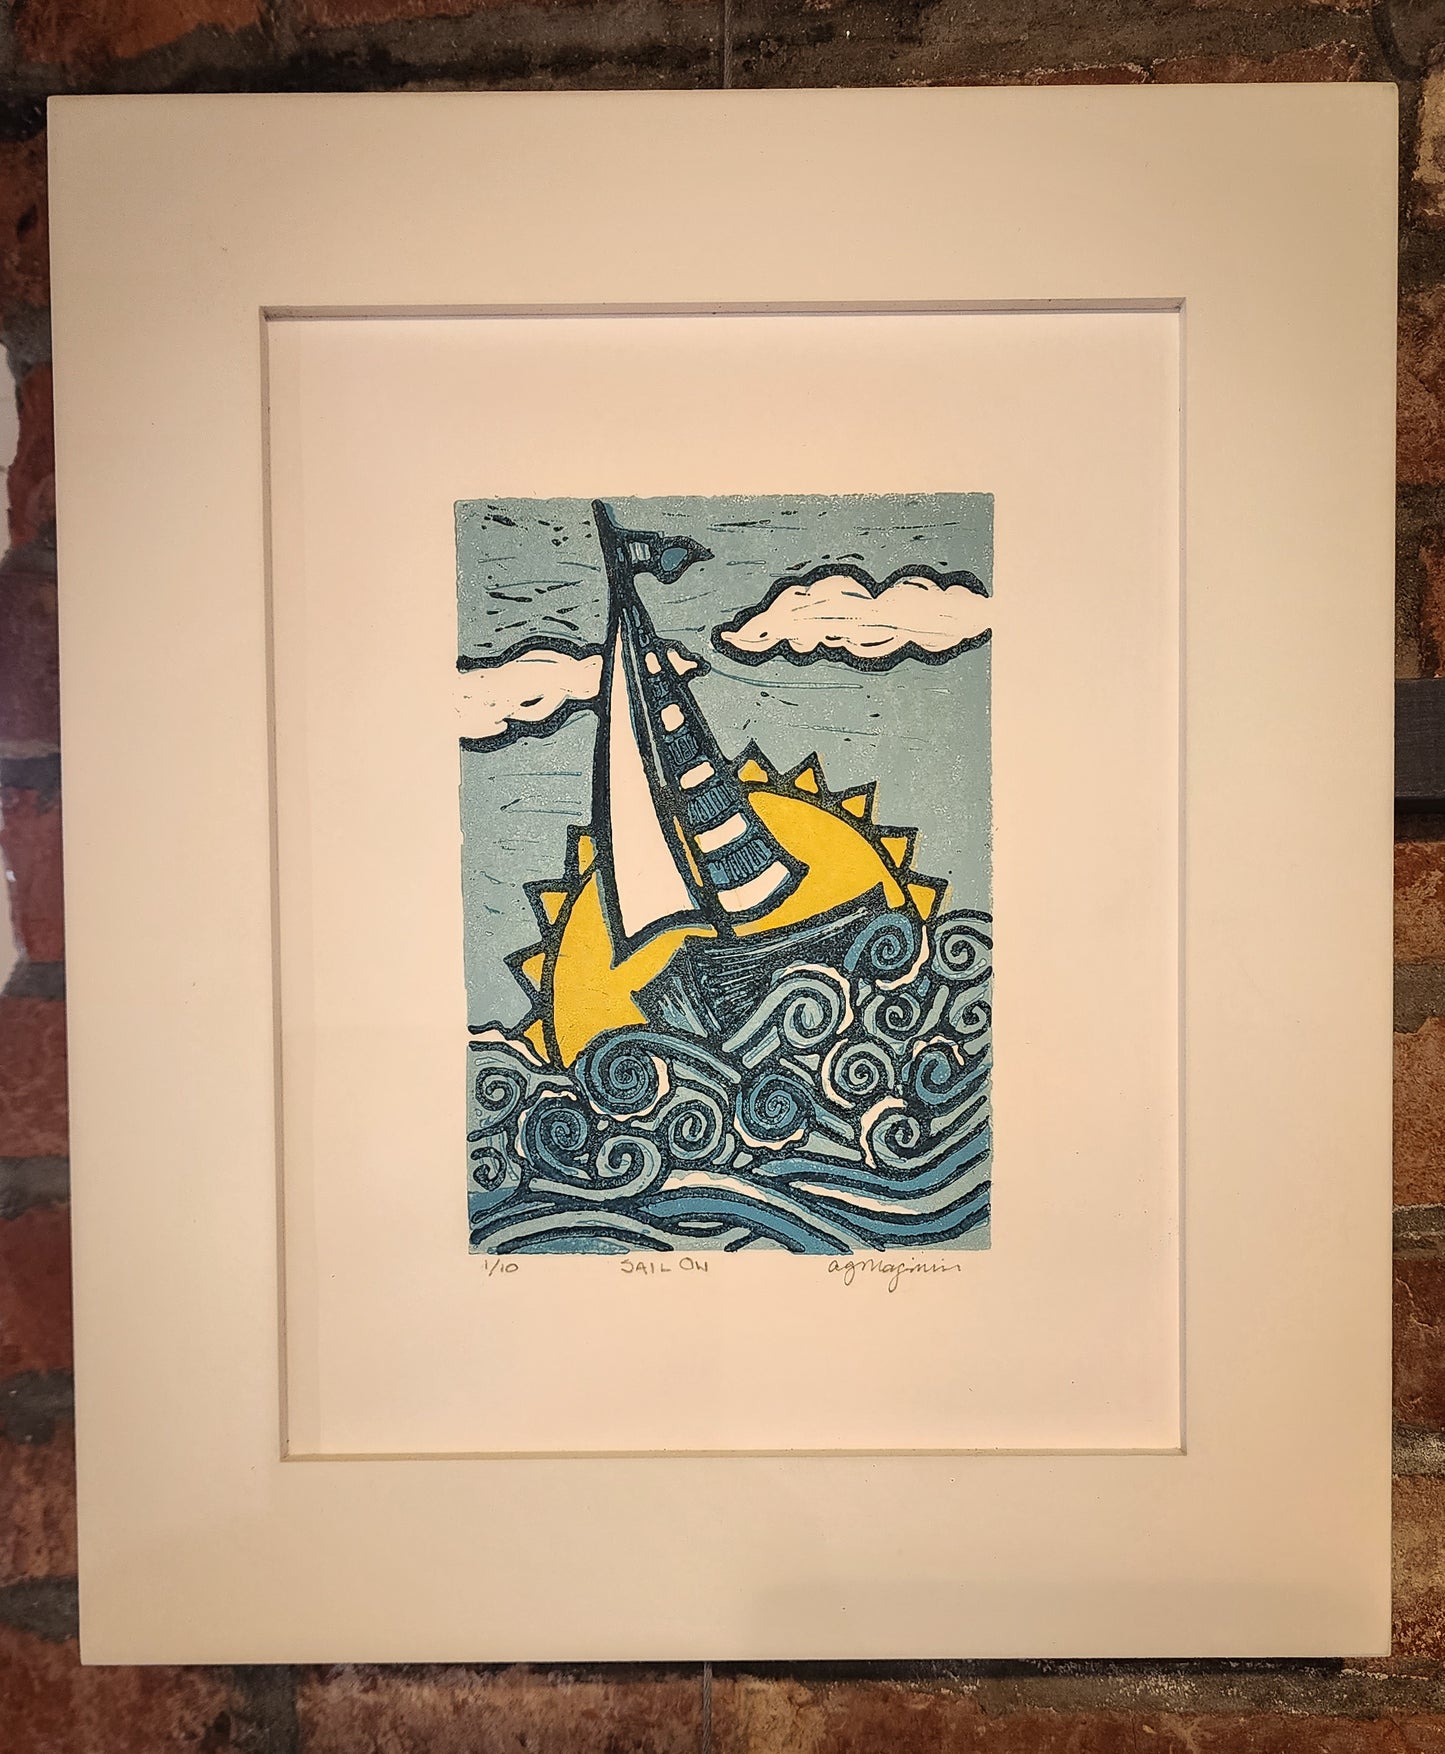 Framed Linocut Print | "Sail On" | Andrea Maginnis